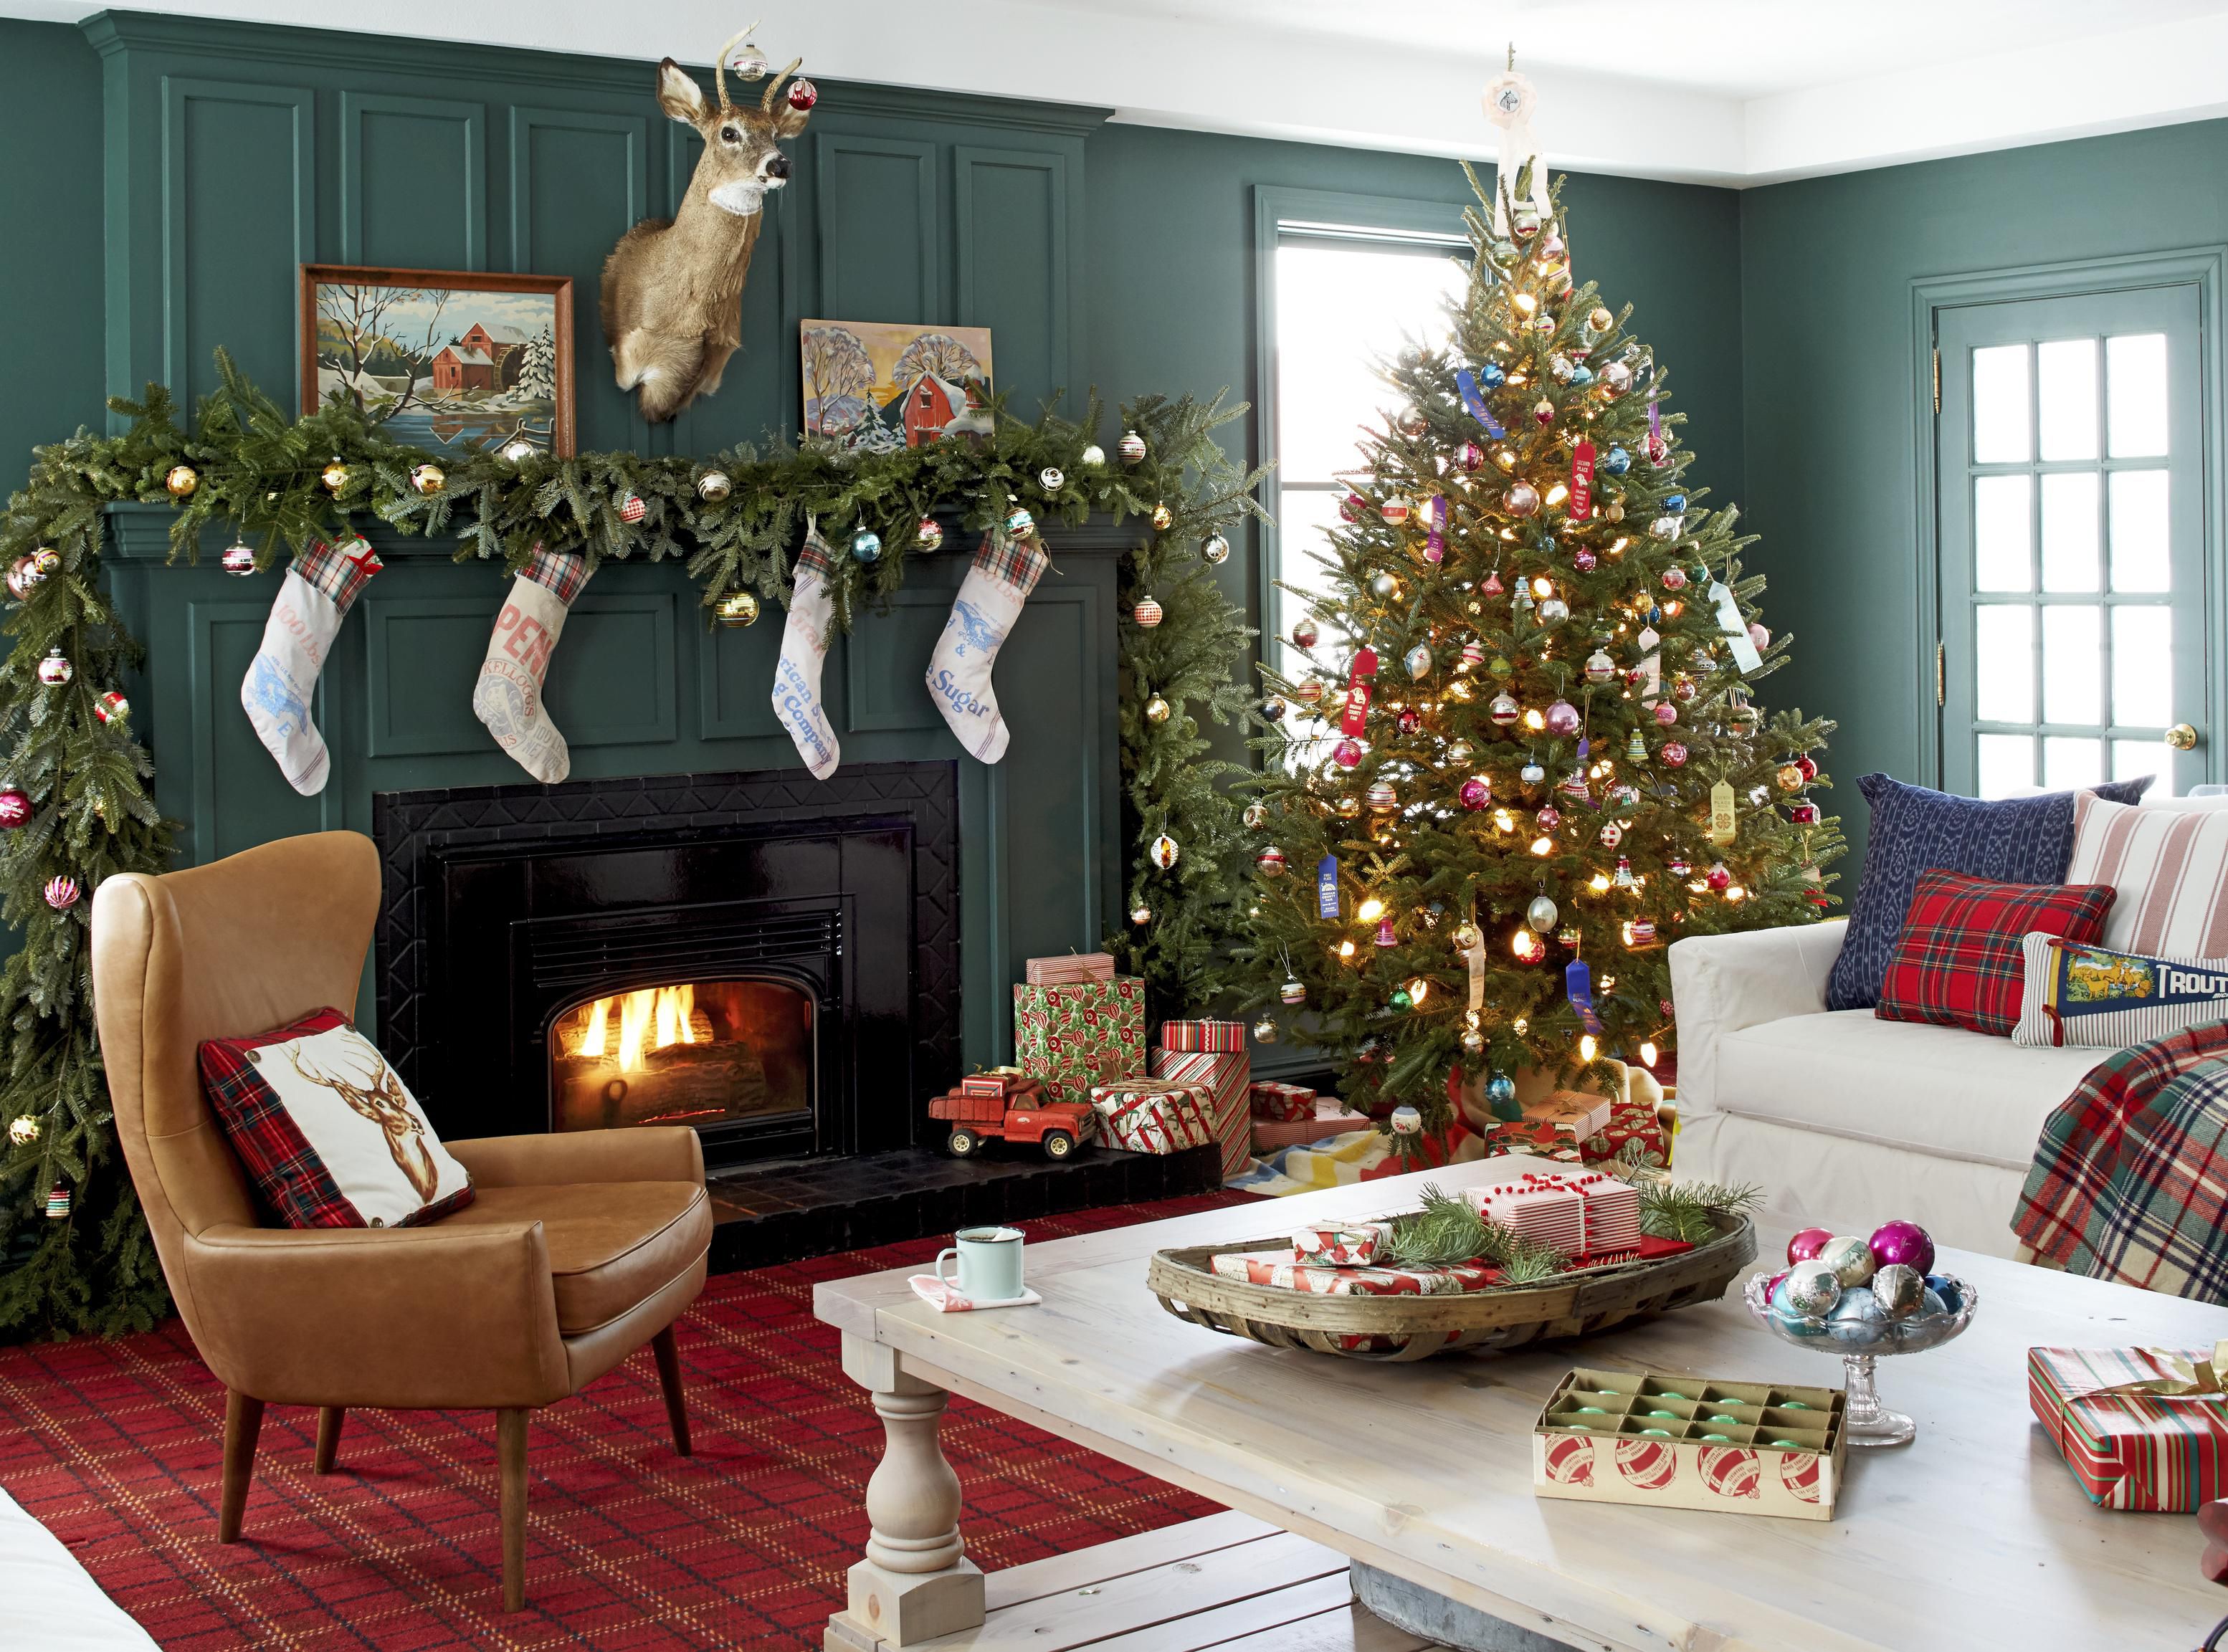 Holiday Decor: Create A Festive Atmosphere